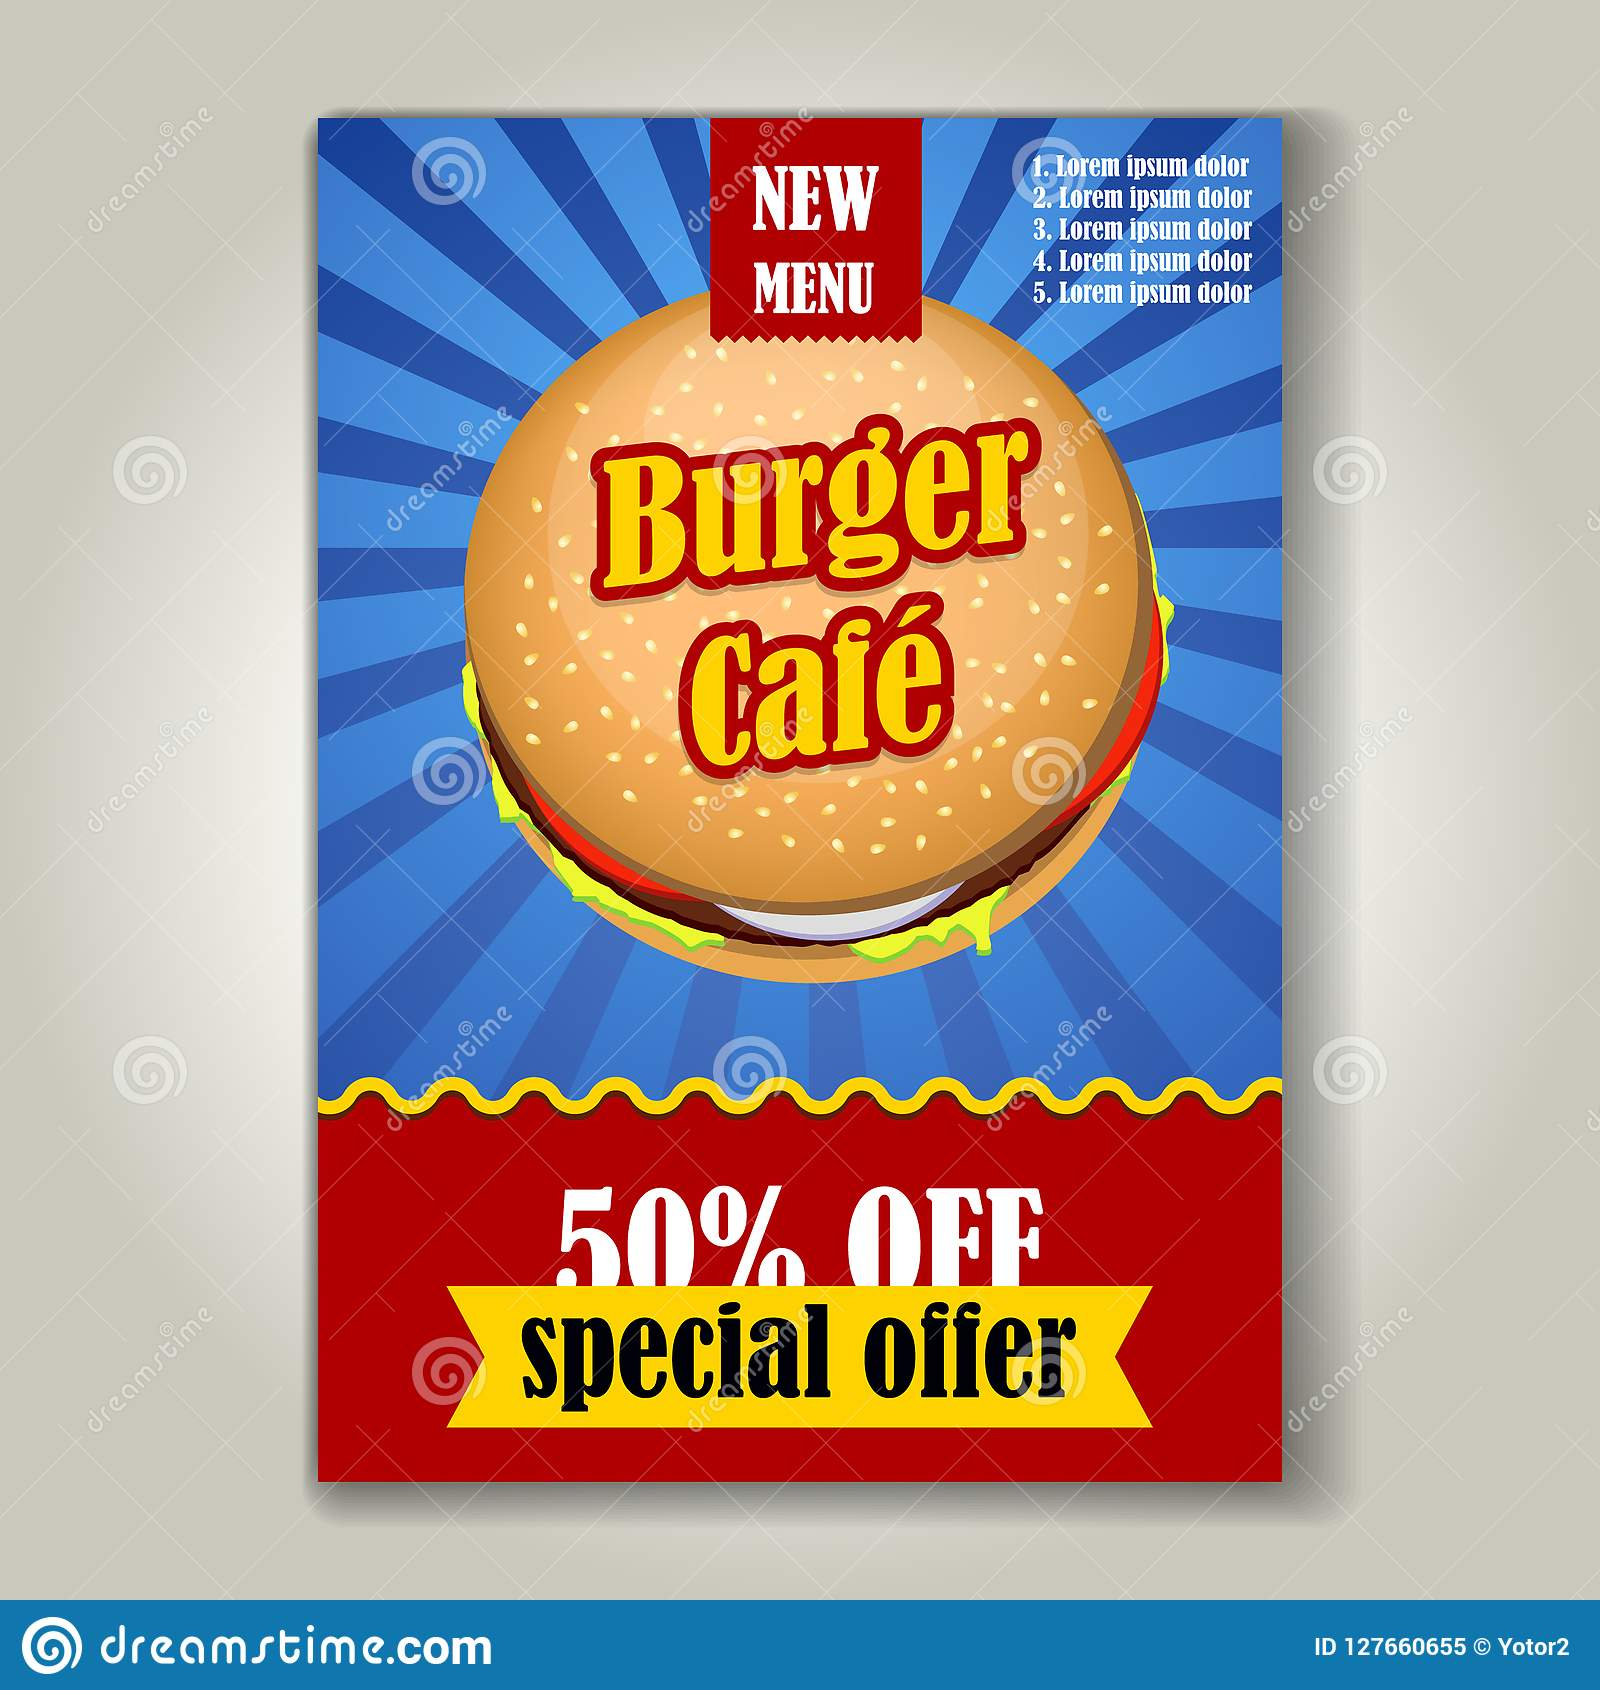 Fast Food Sale Flyer Design Vector Template In A10 Size Within Food Sale Flyer Template